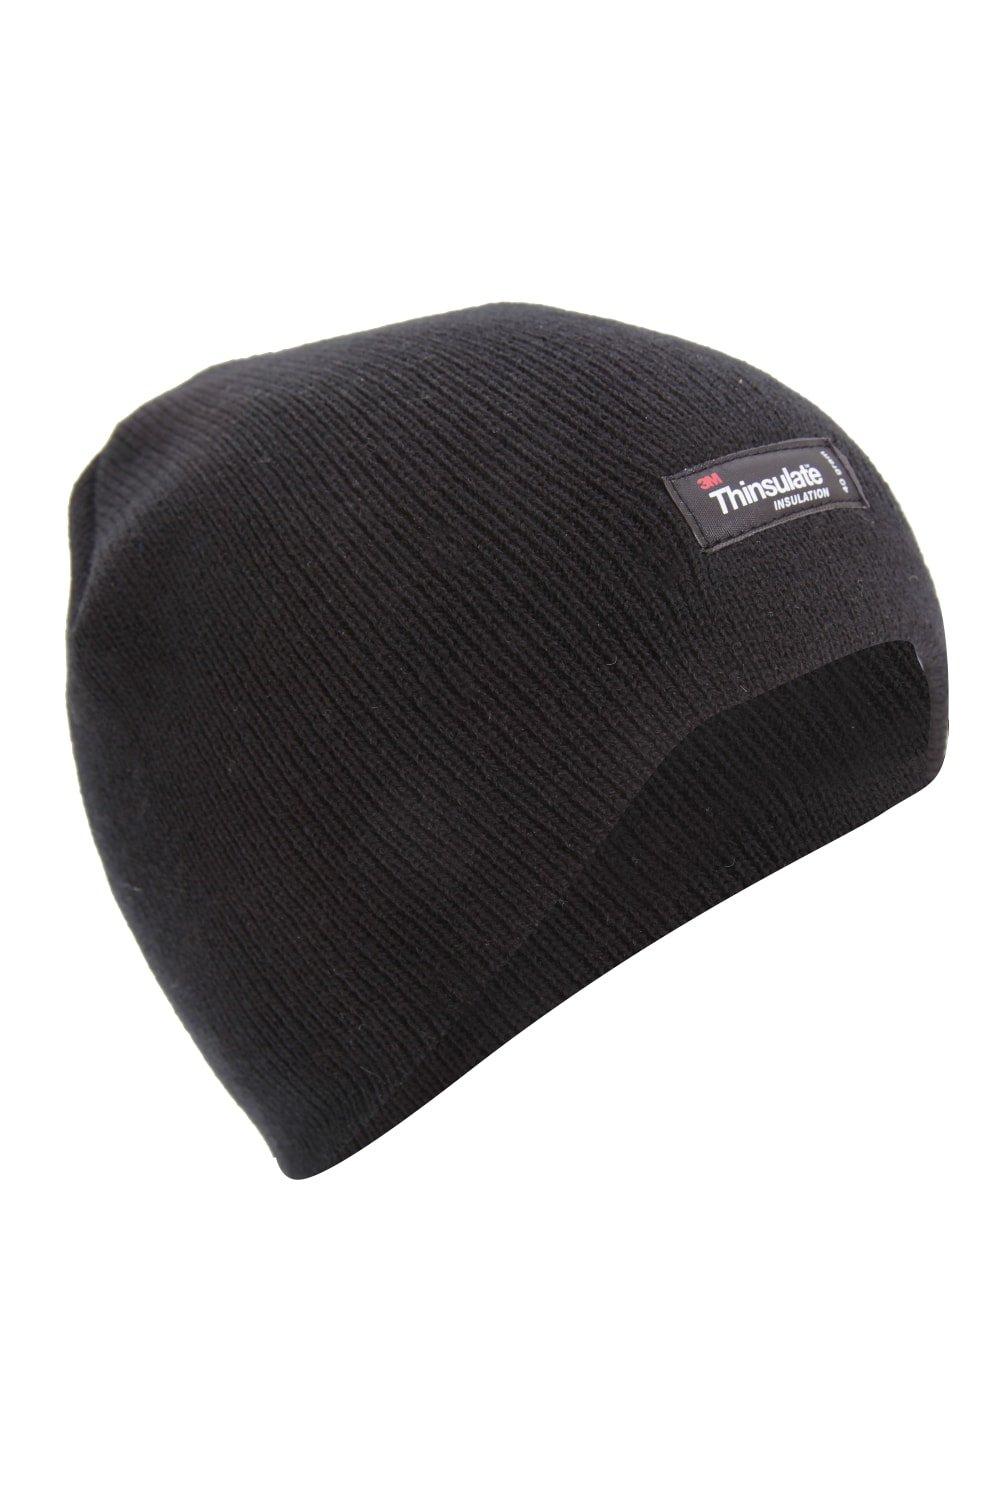 Plain Thinsulate Thermal Winter Beanie Hat (3M 40g)